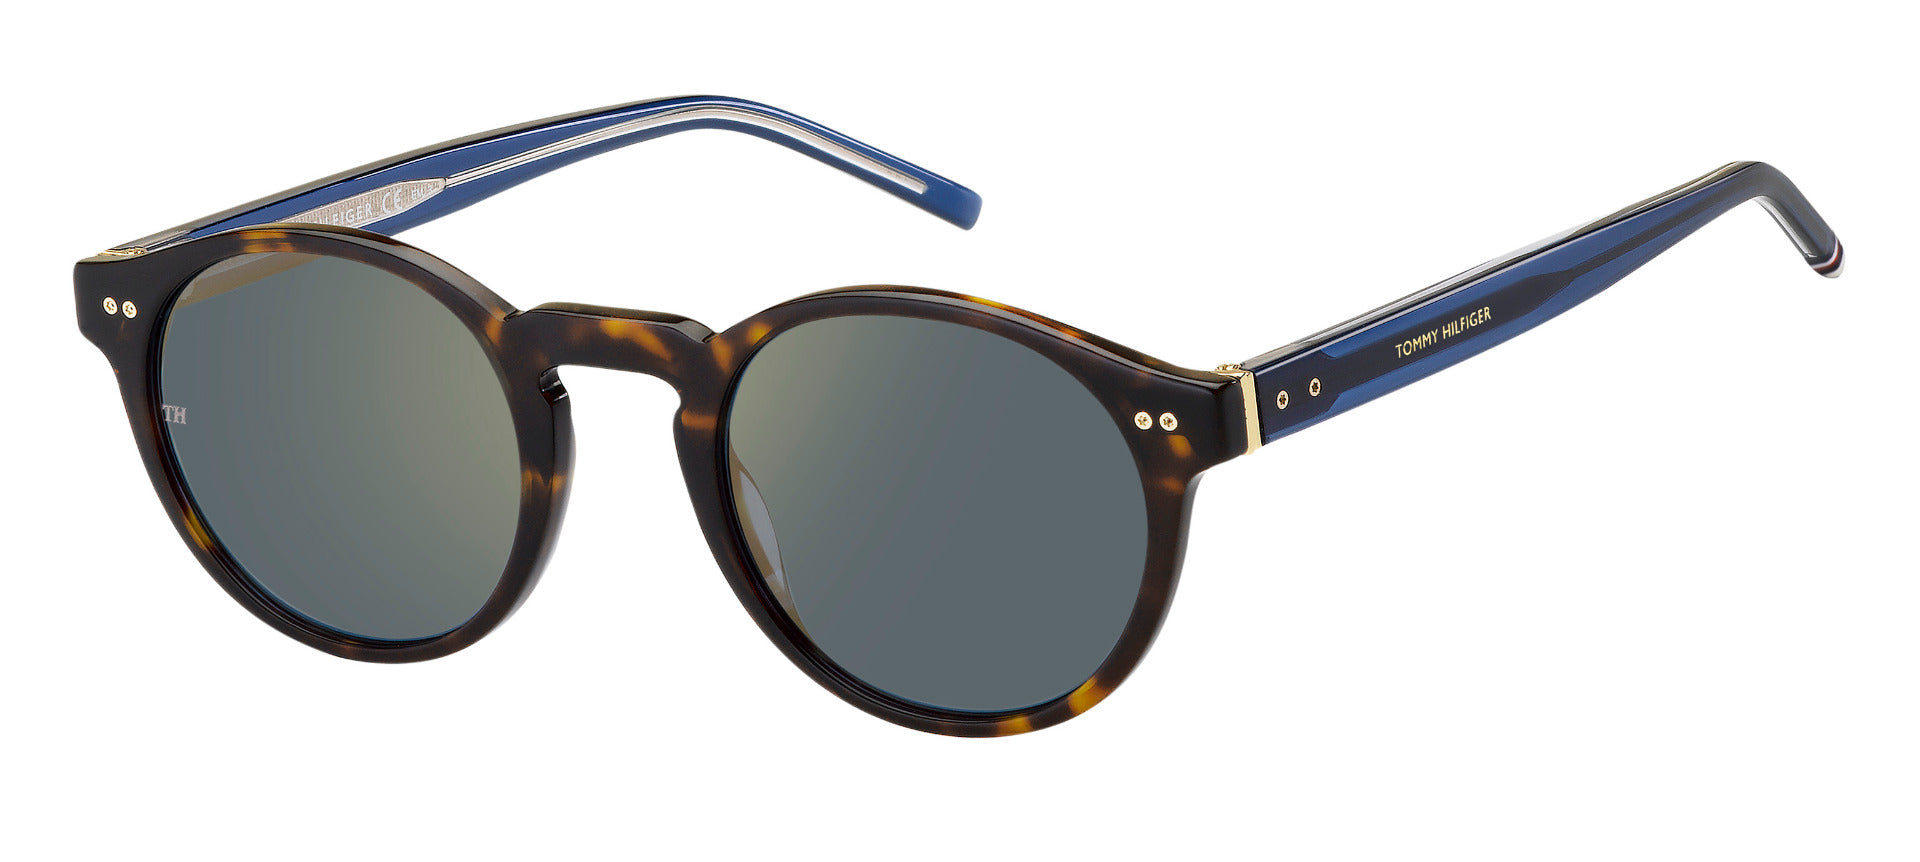 Tommy Hilfiger Round Sunglasses | Fashion Eyewear US